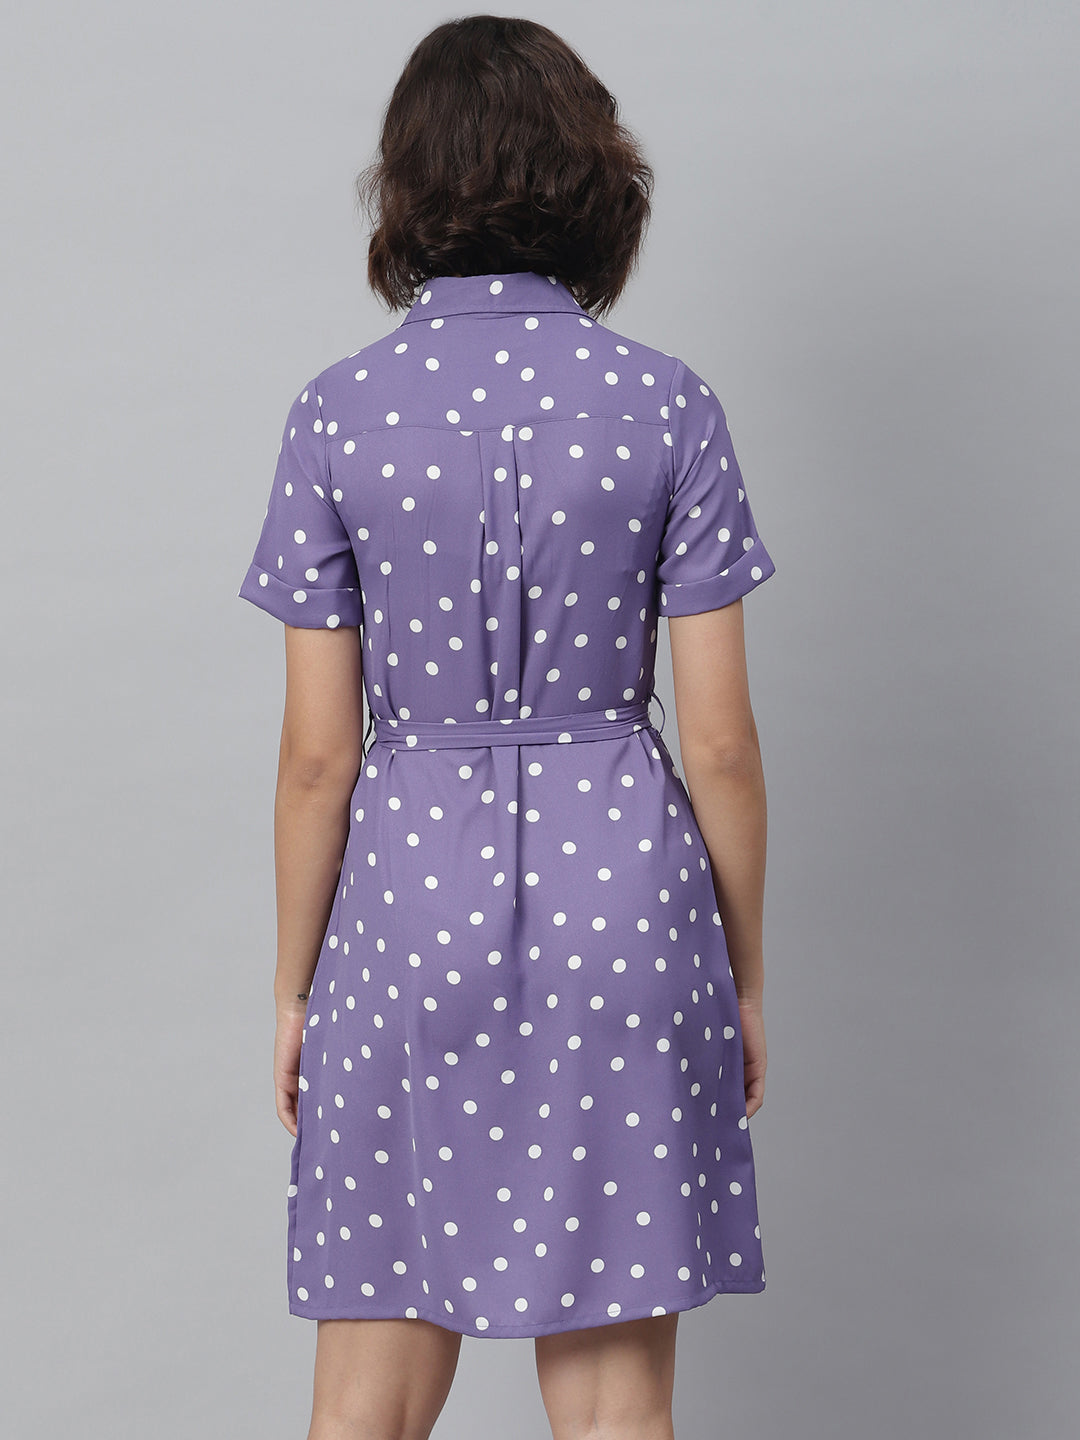 Women's Lavender Polka Shirt Dress with belt - StyleStone